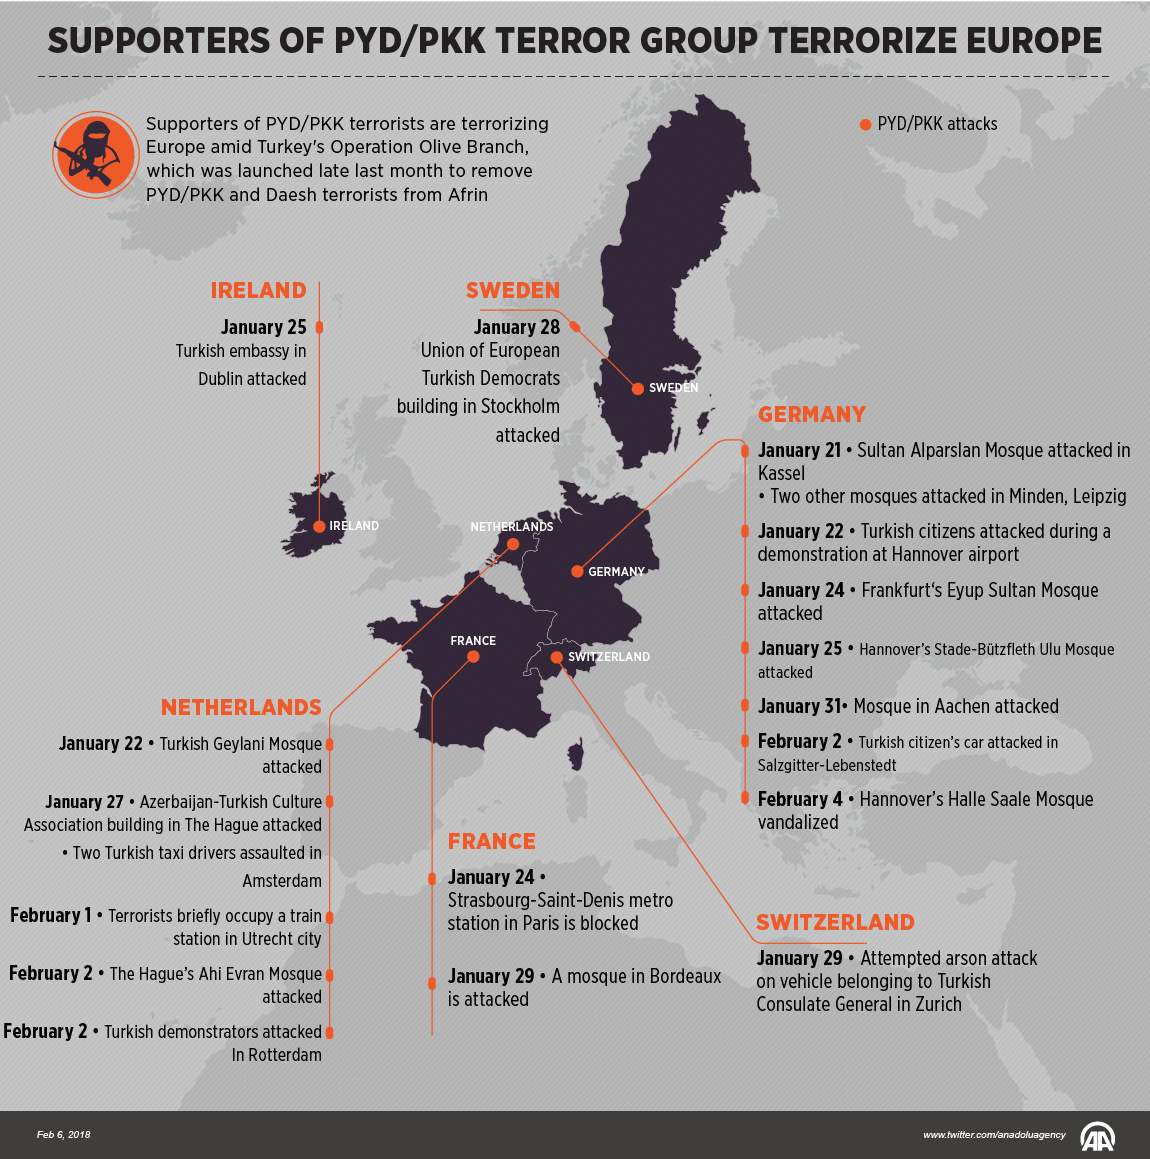 Supporters of PYD/PKK terror group terrorize Europe